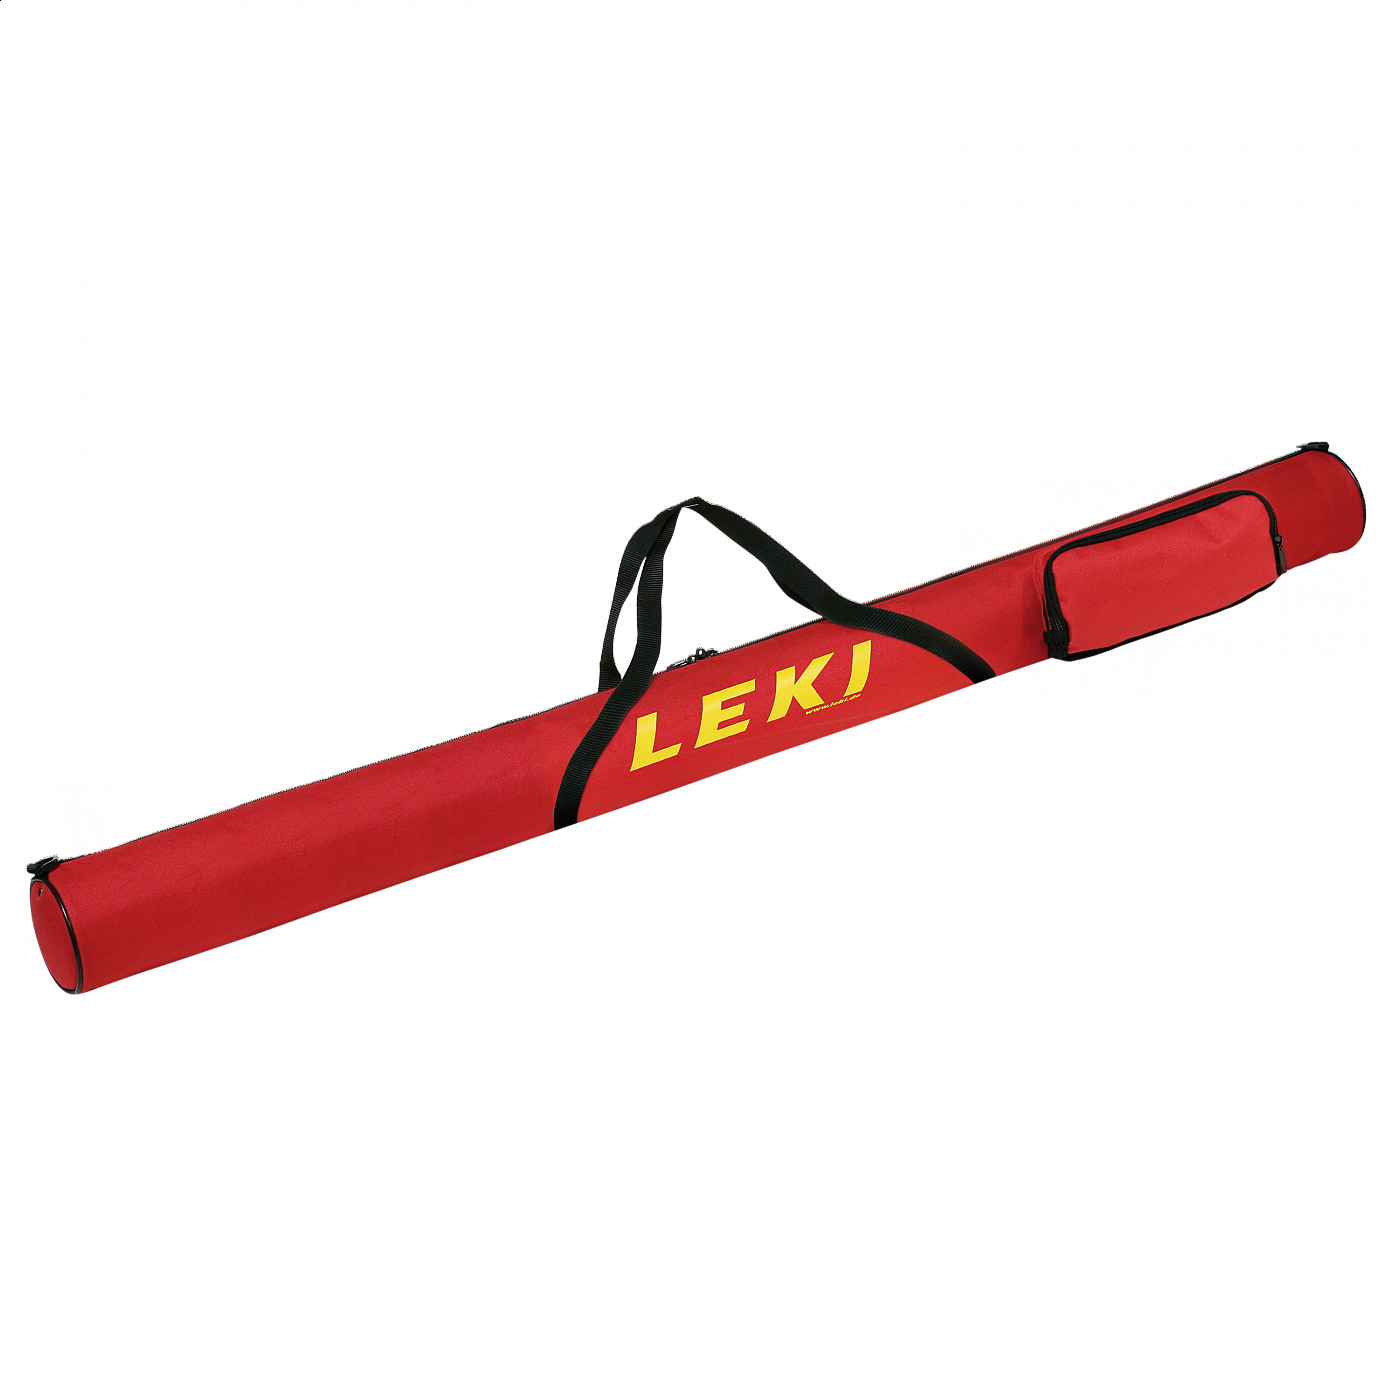 Leki - Trainer Pole bag - 2 pairs of poles / 140 cm